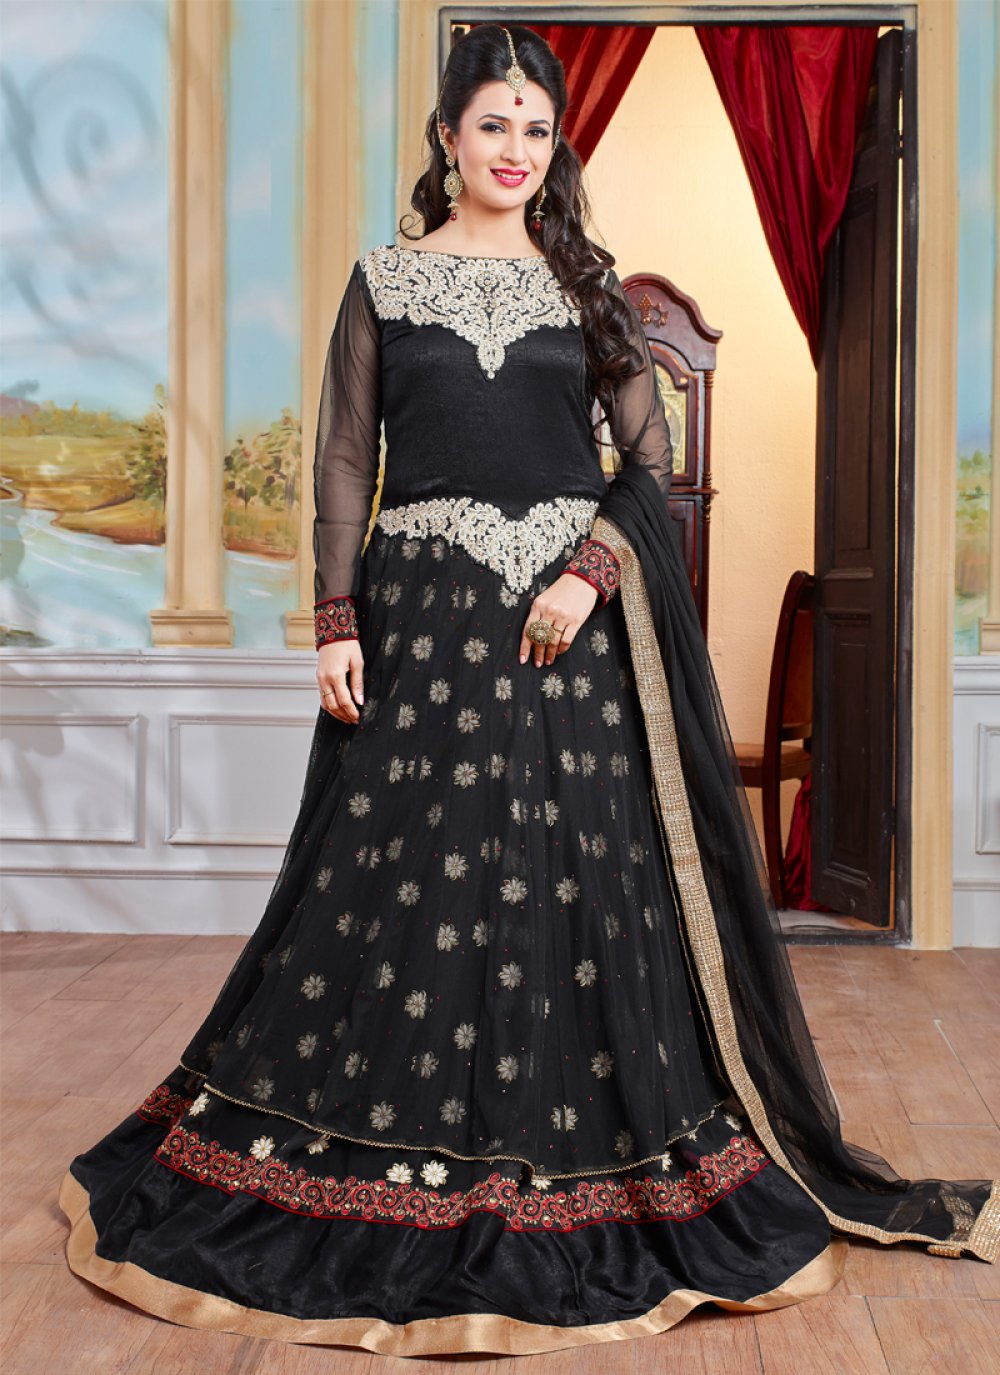 Sayantani Ghosh | Indian beauty saree, Long top dress, Designer bridal  lehenga choli